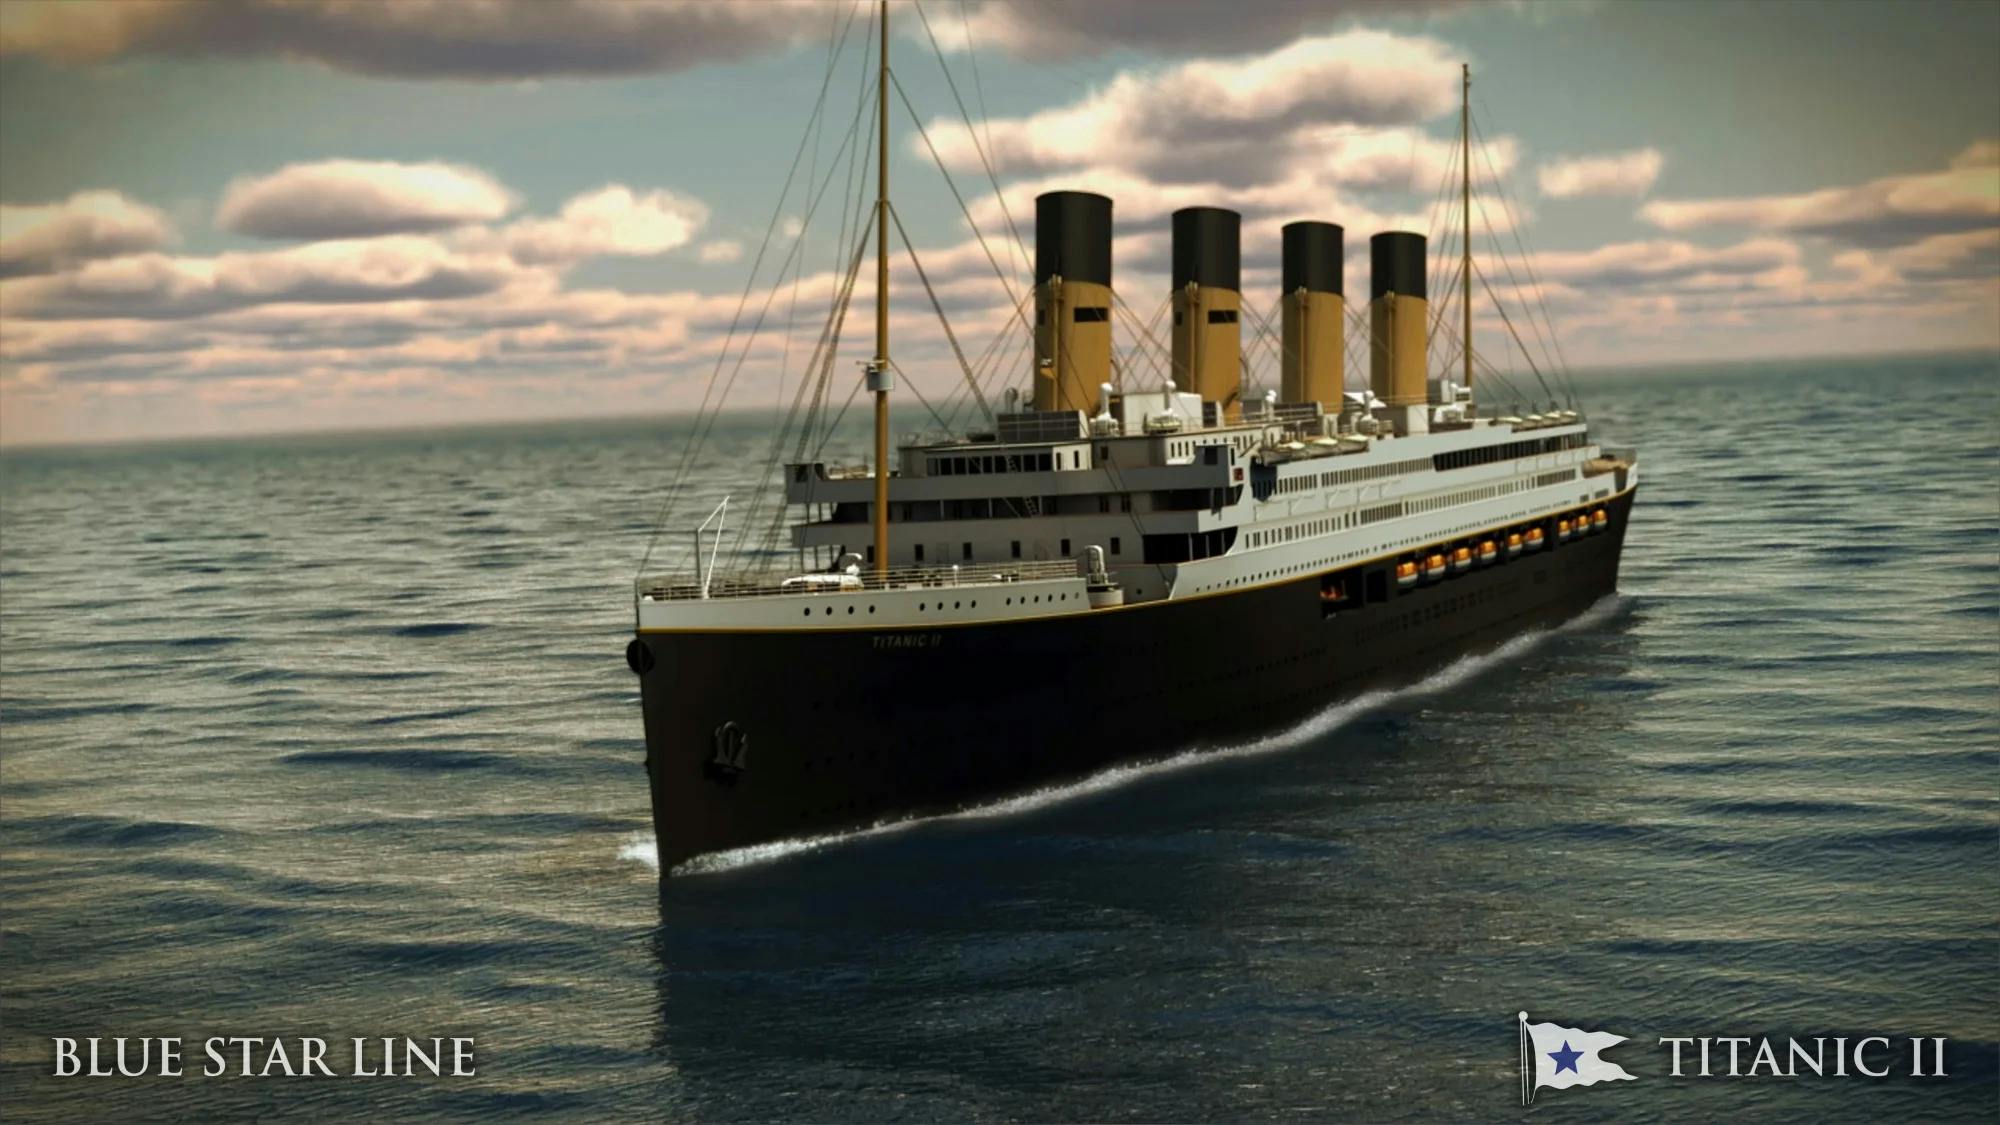 Billionaire Plans to Launch Titanic II